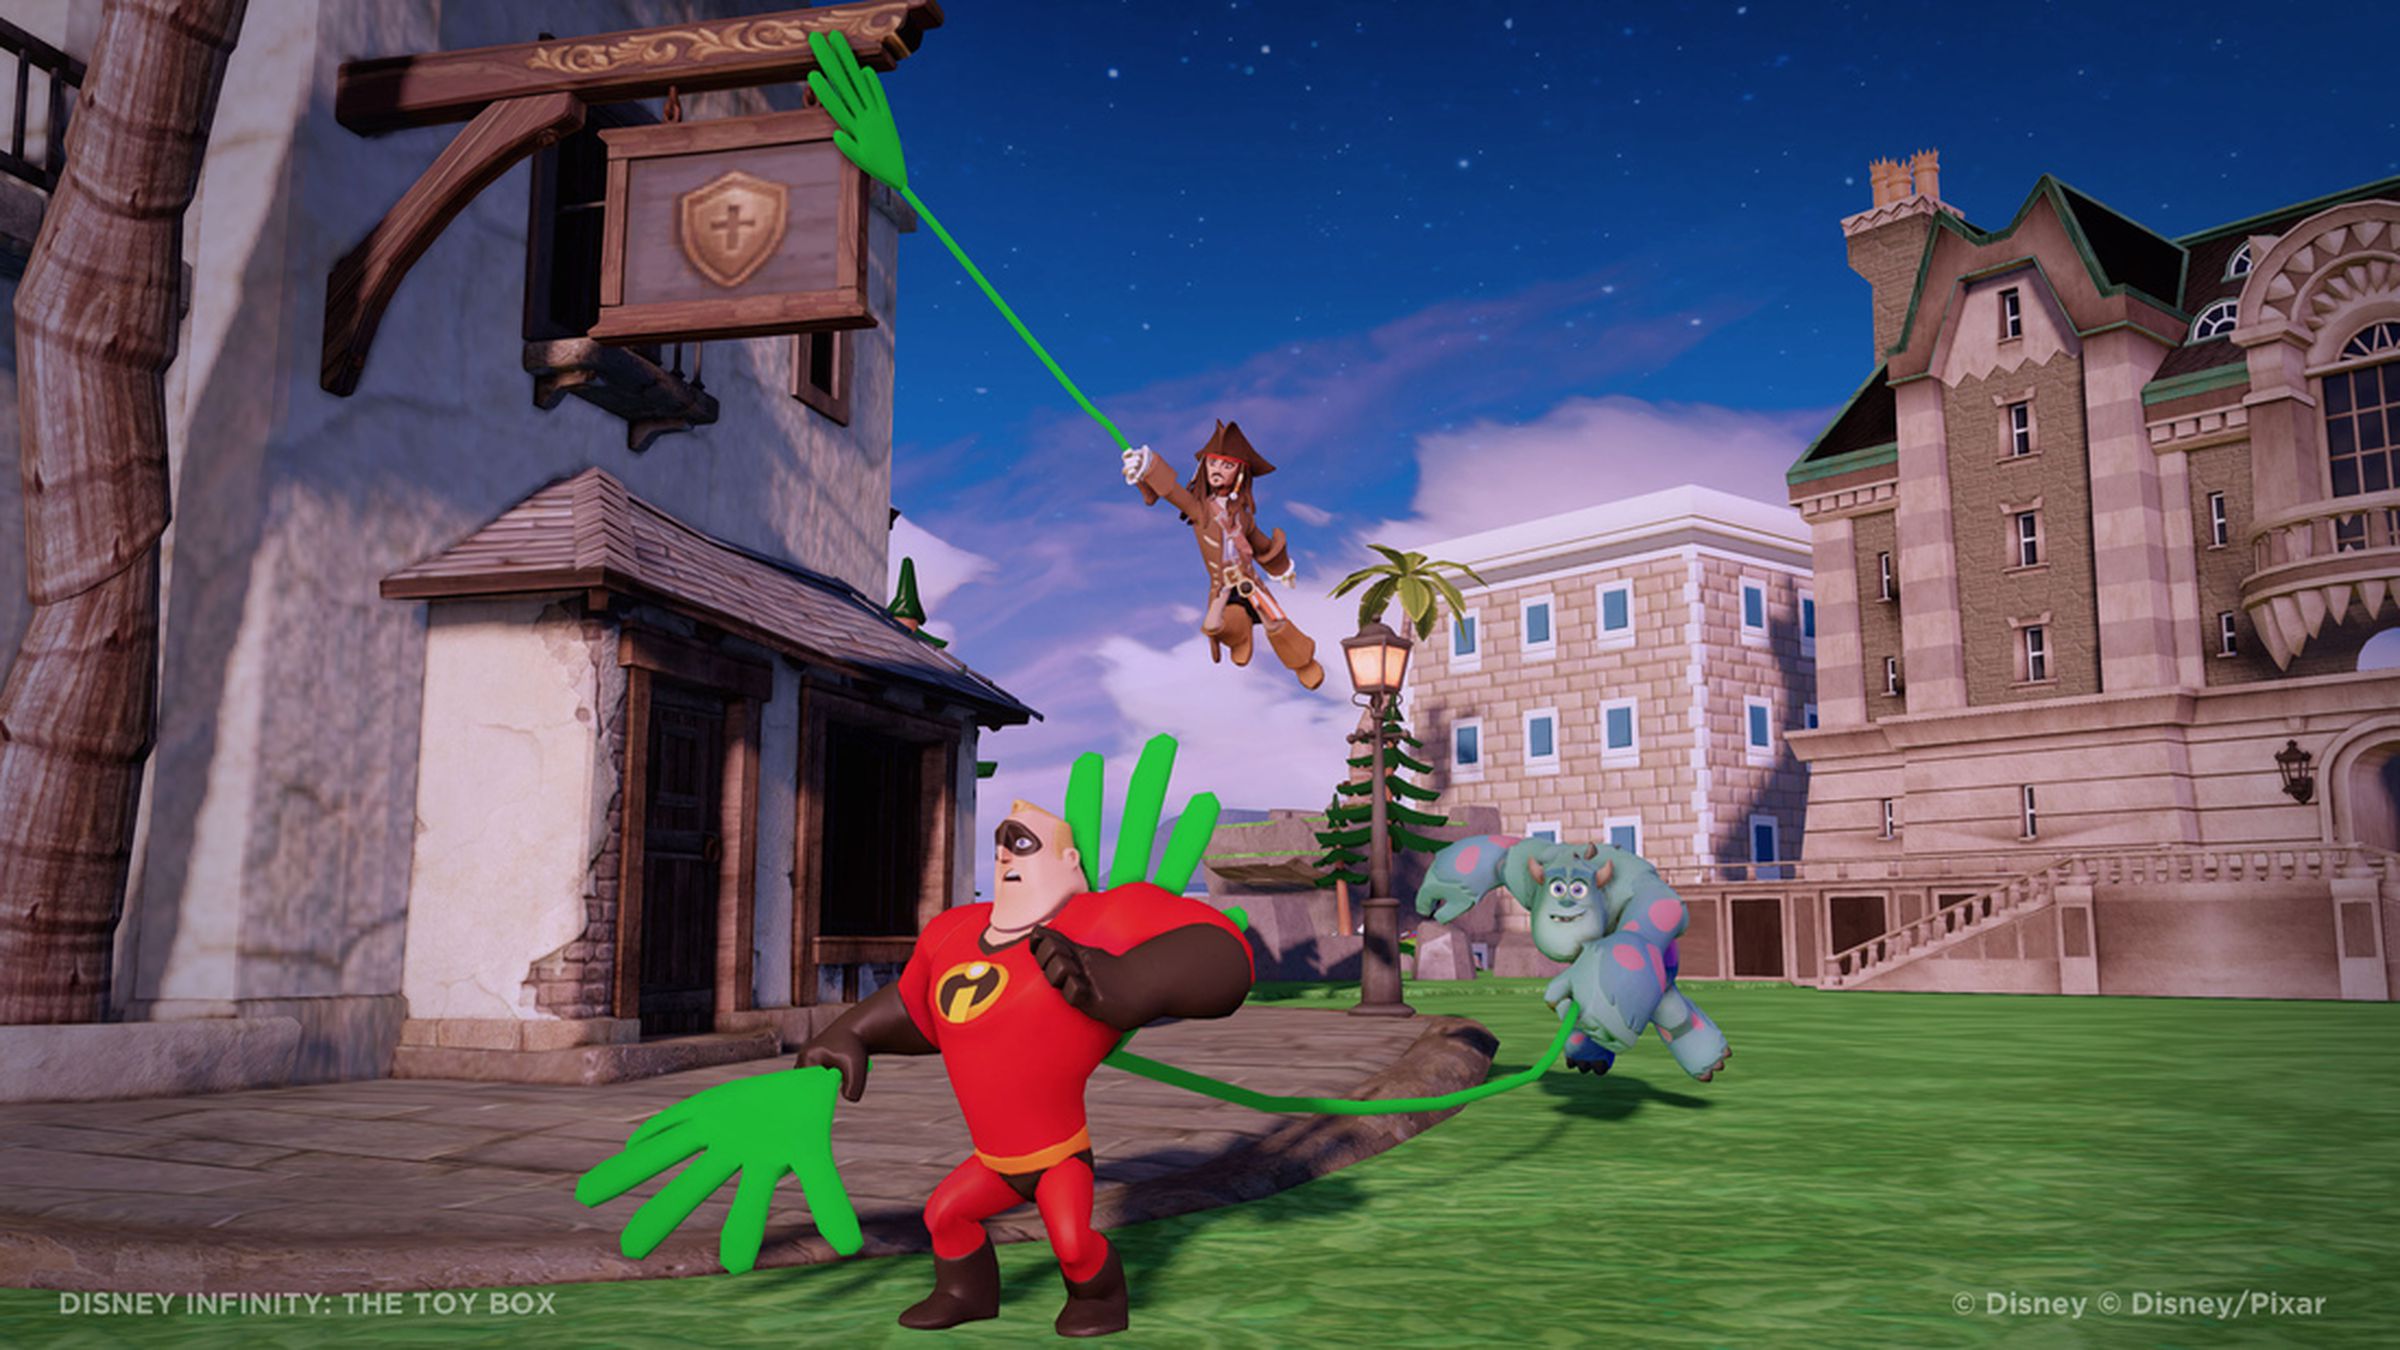 'Disney Infinity' toys and screenshots